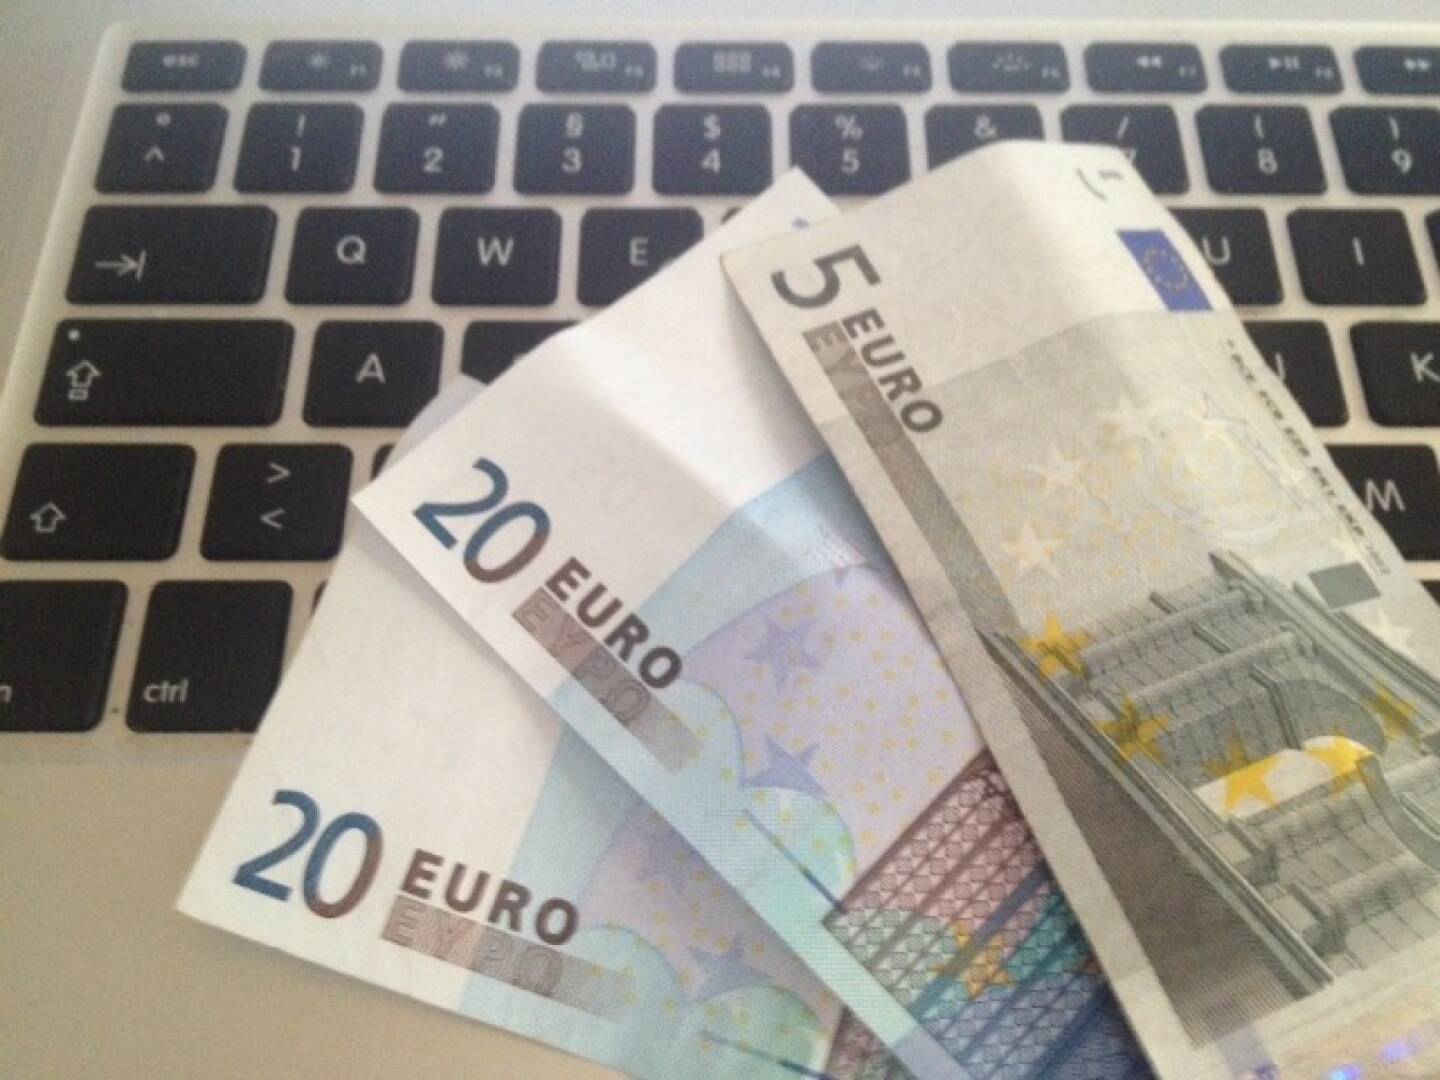 Porr erhöht das Kapital zu 45 Euro http://www.porr.at/index.php?id=5267